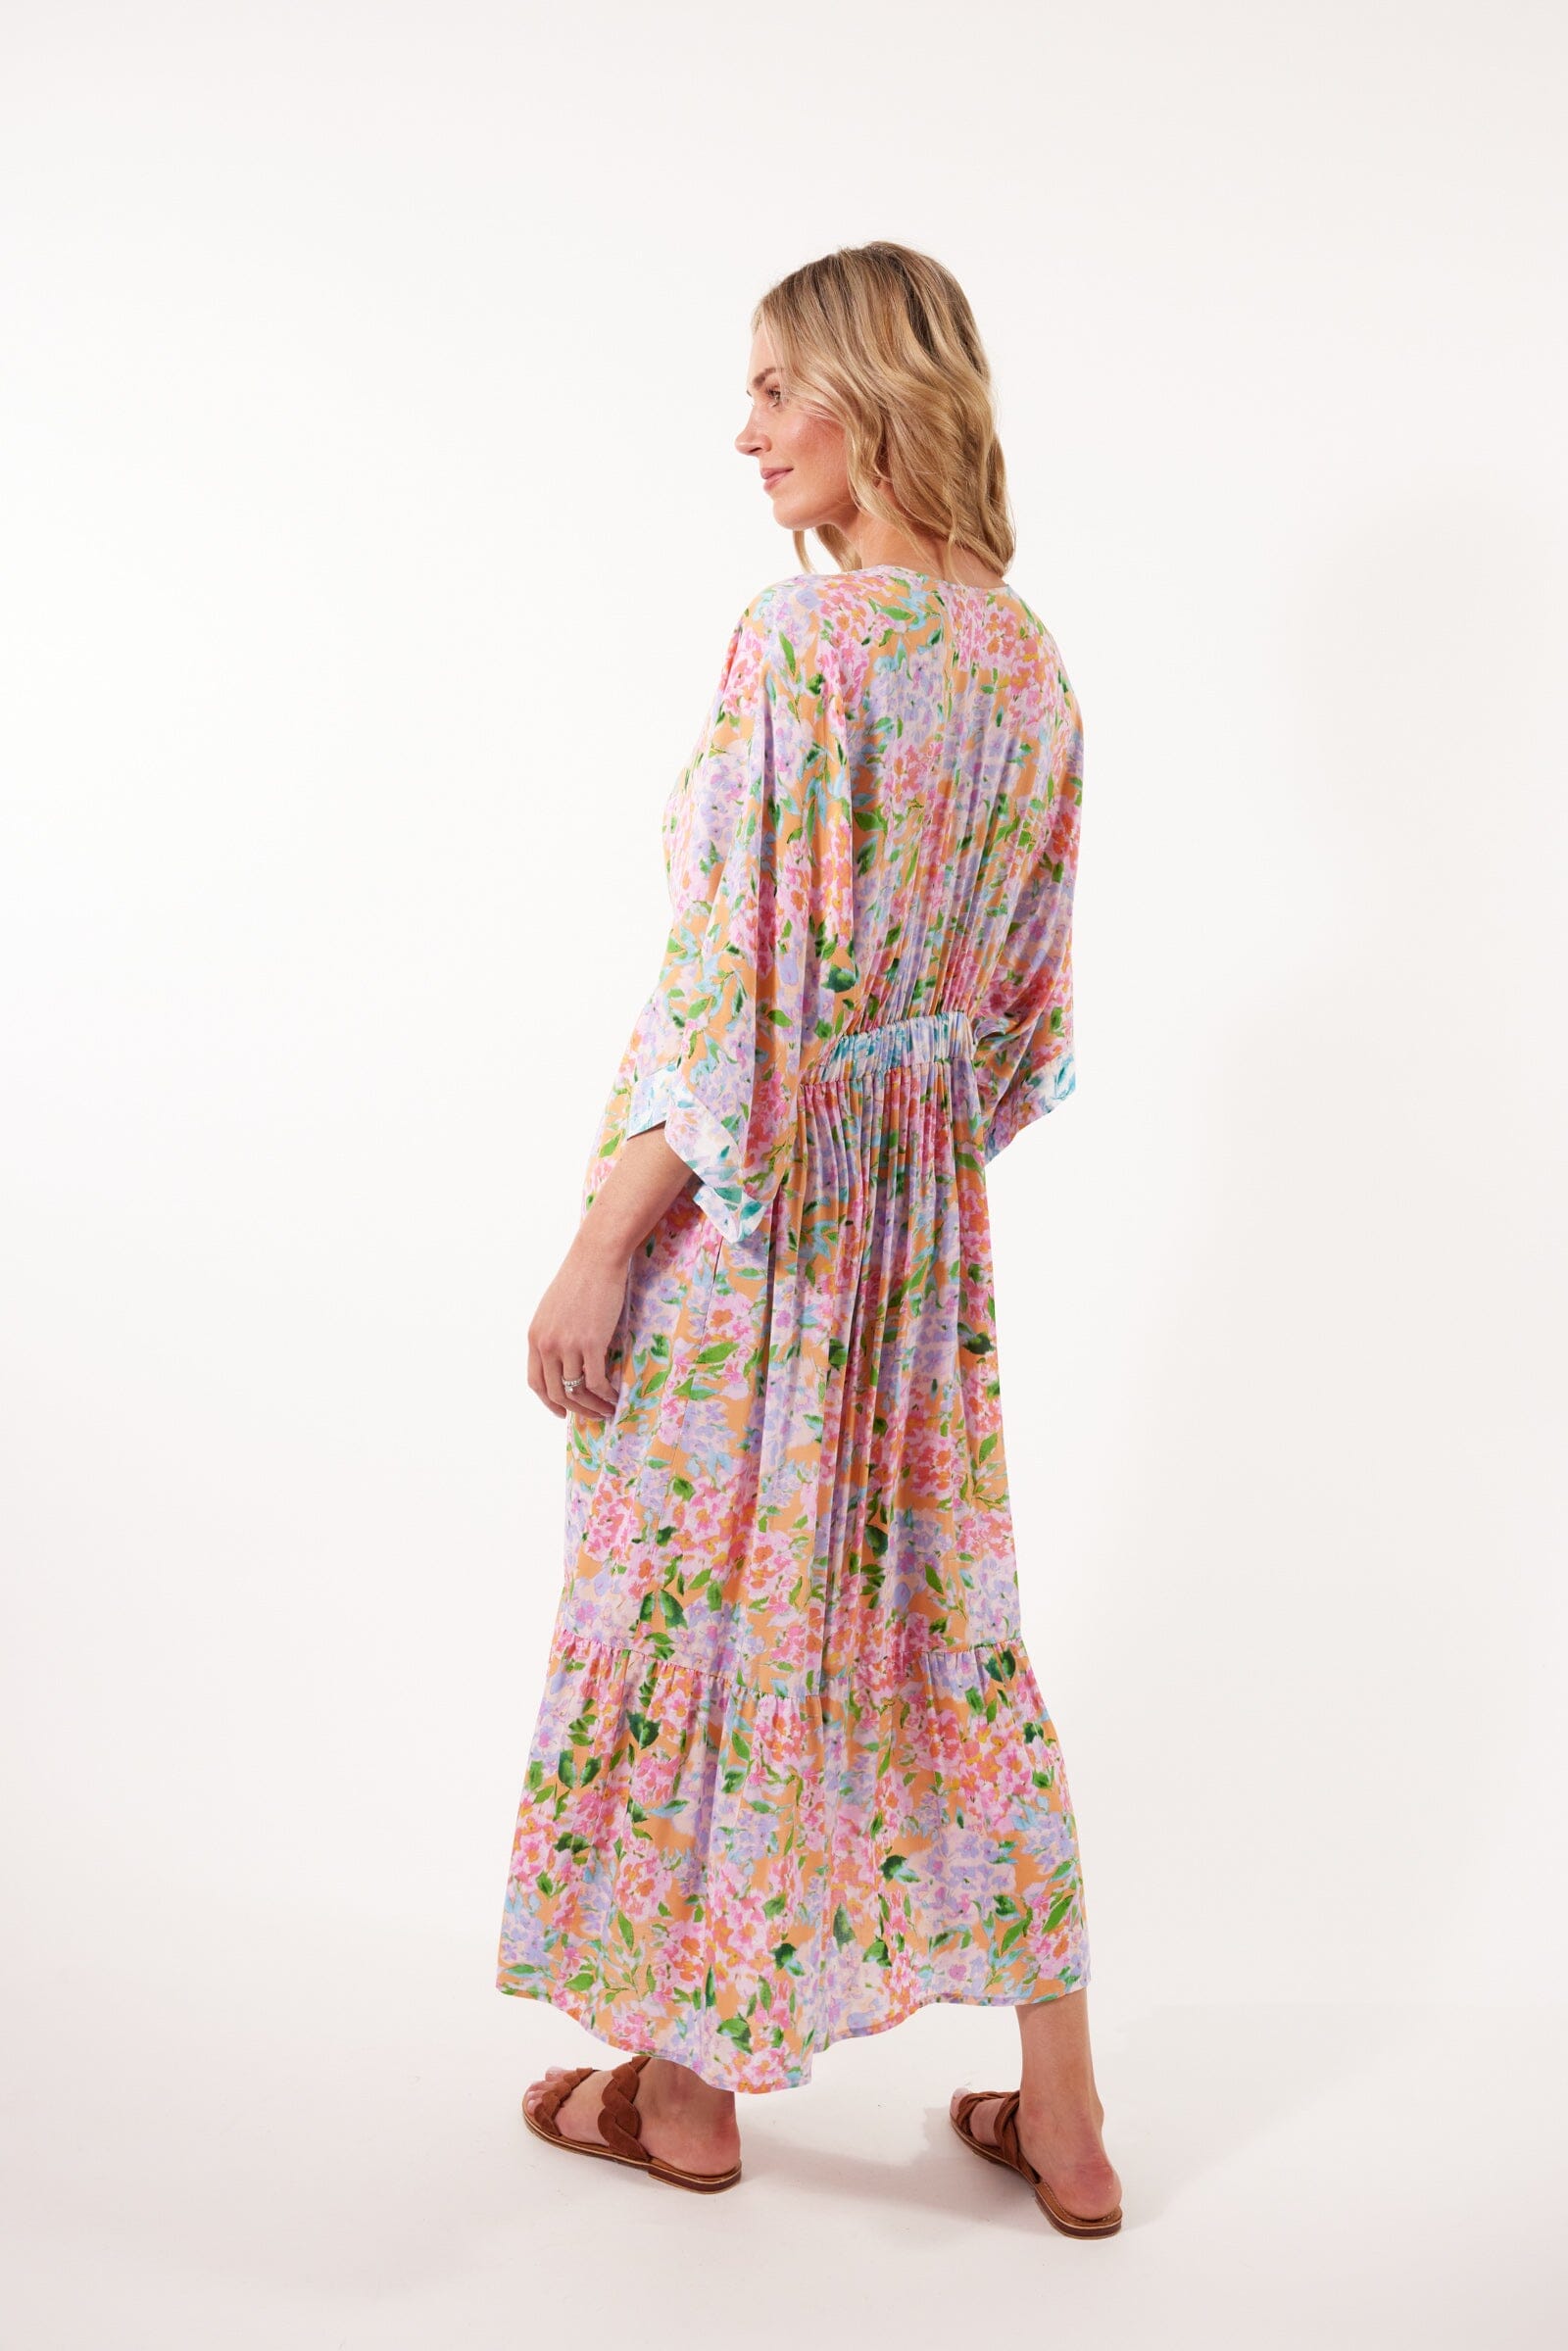 Isle of Mine - Botanical Relax Dress - Sunset Hydrangea Womens isleOFmine